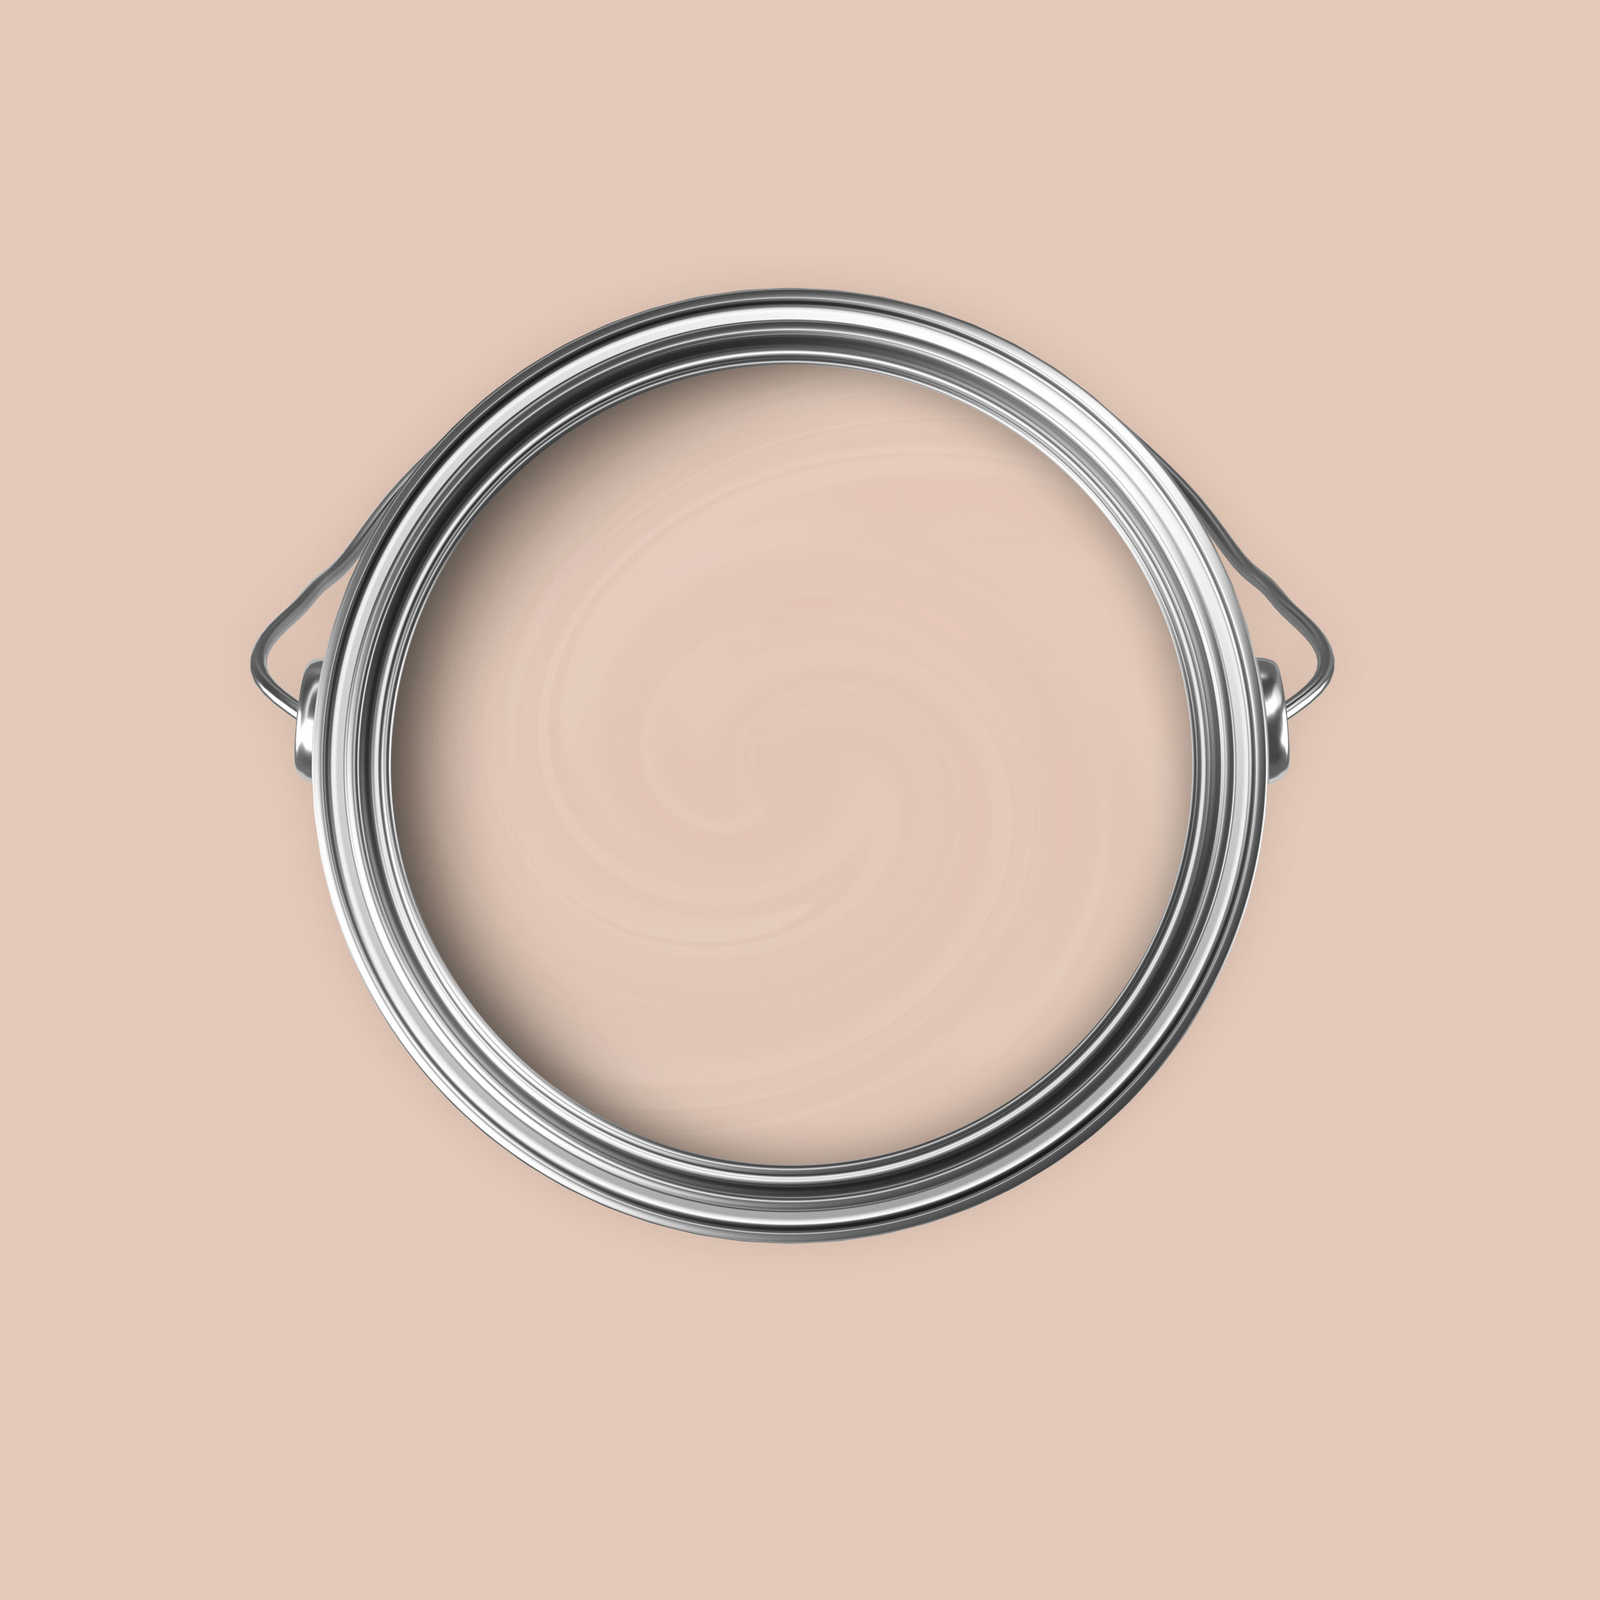             Premium Wall Paint serene sand »Luxury Lipstick« NW1003 – 5 litre
        